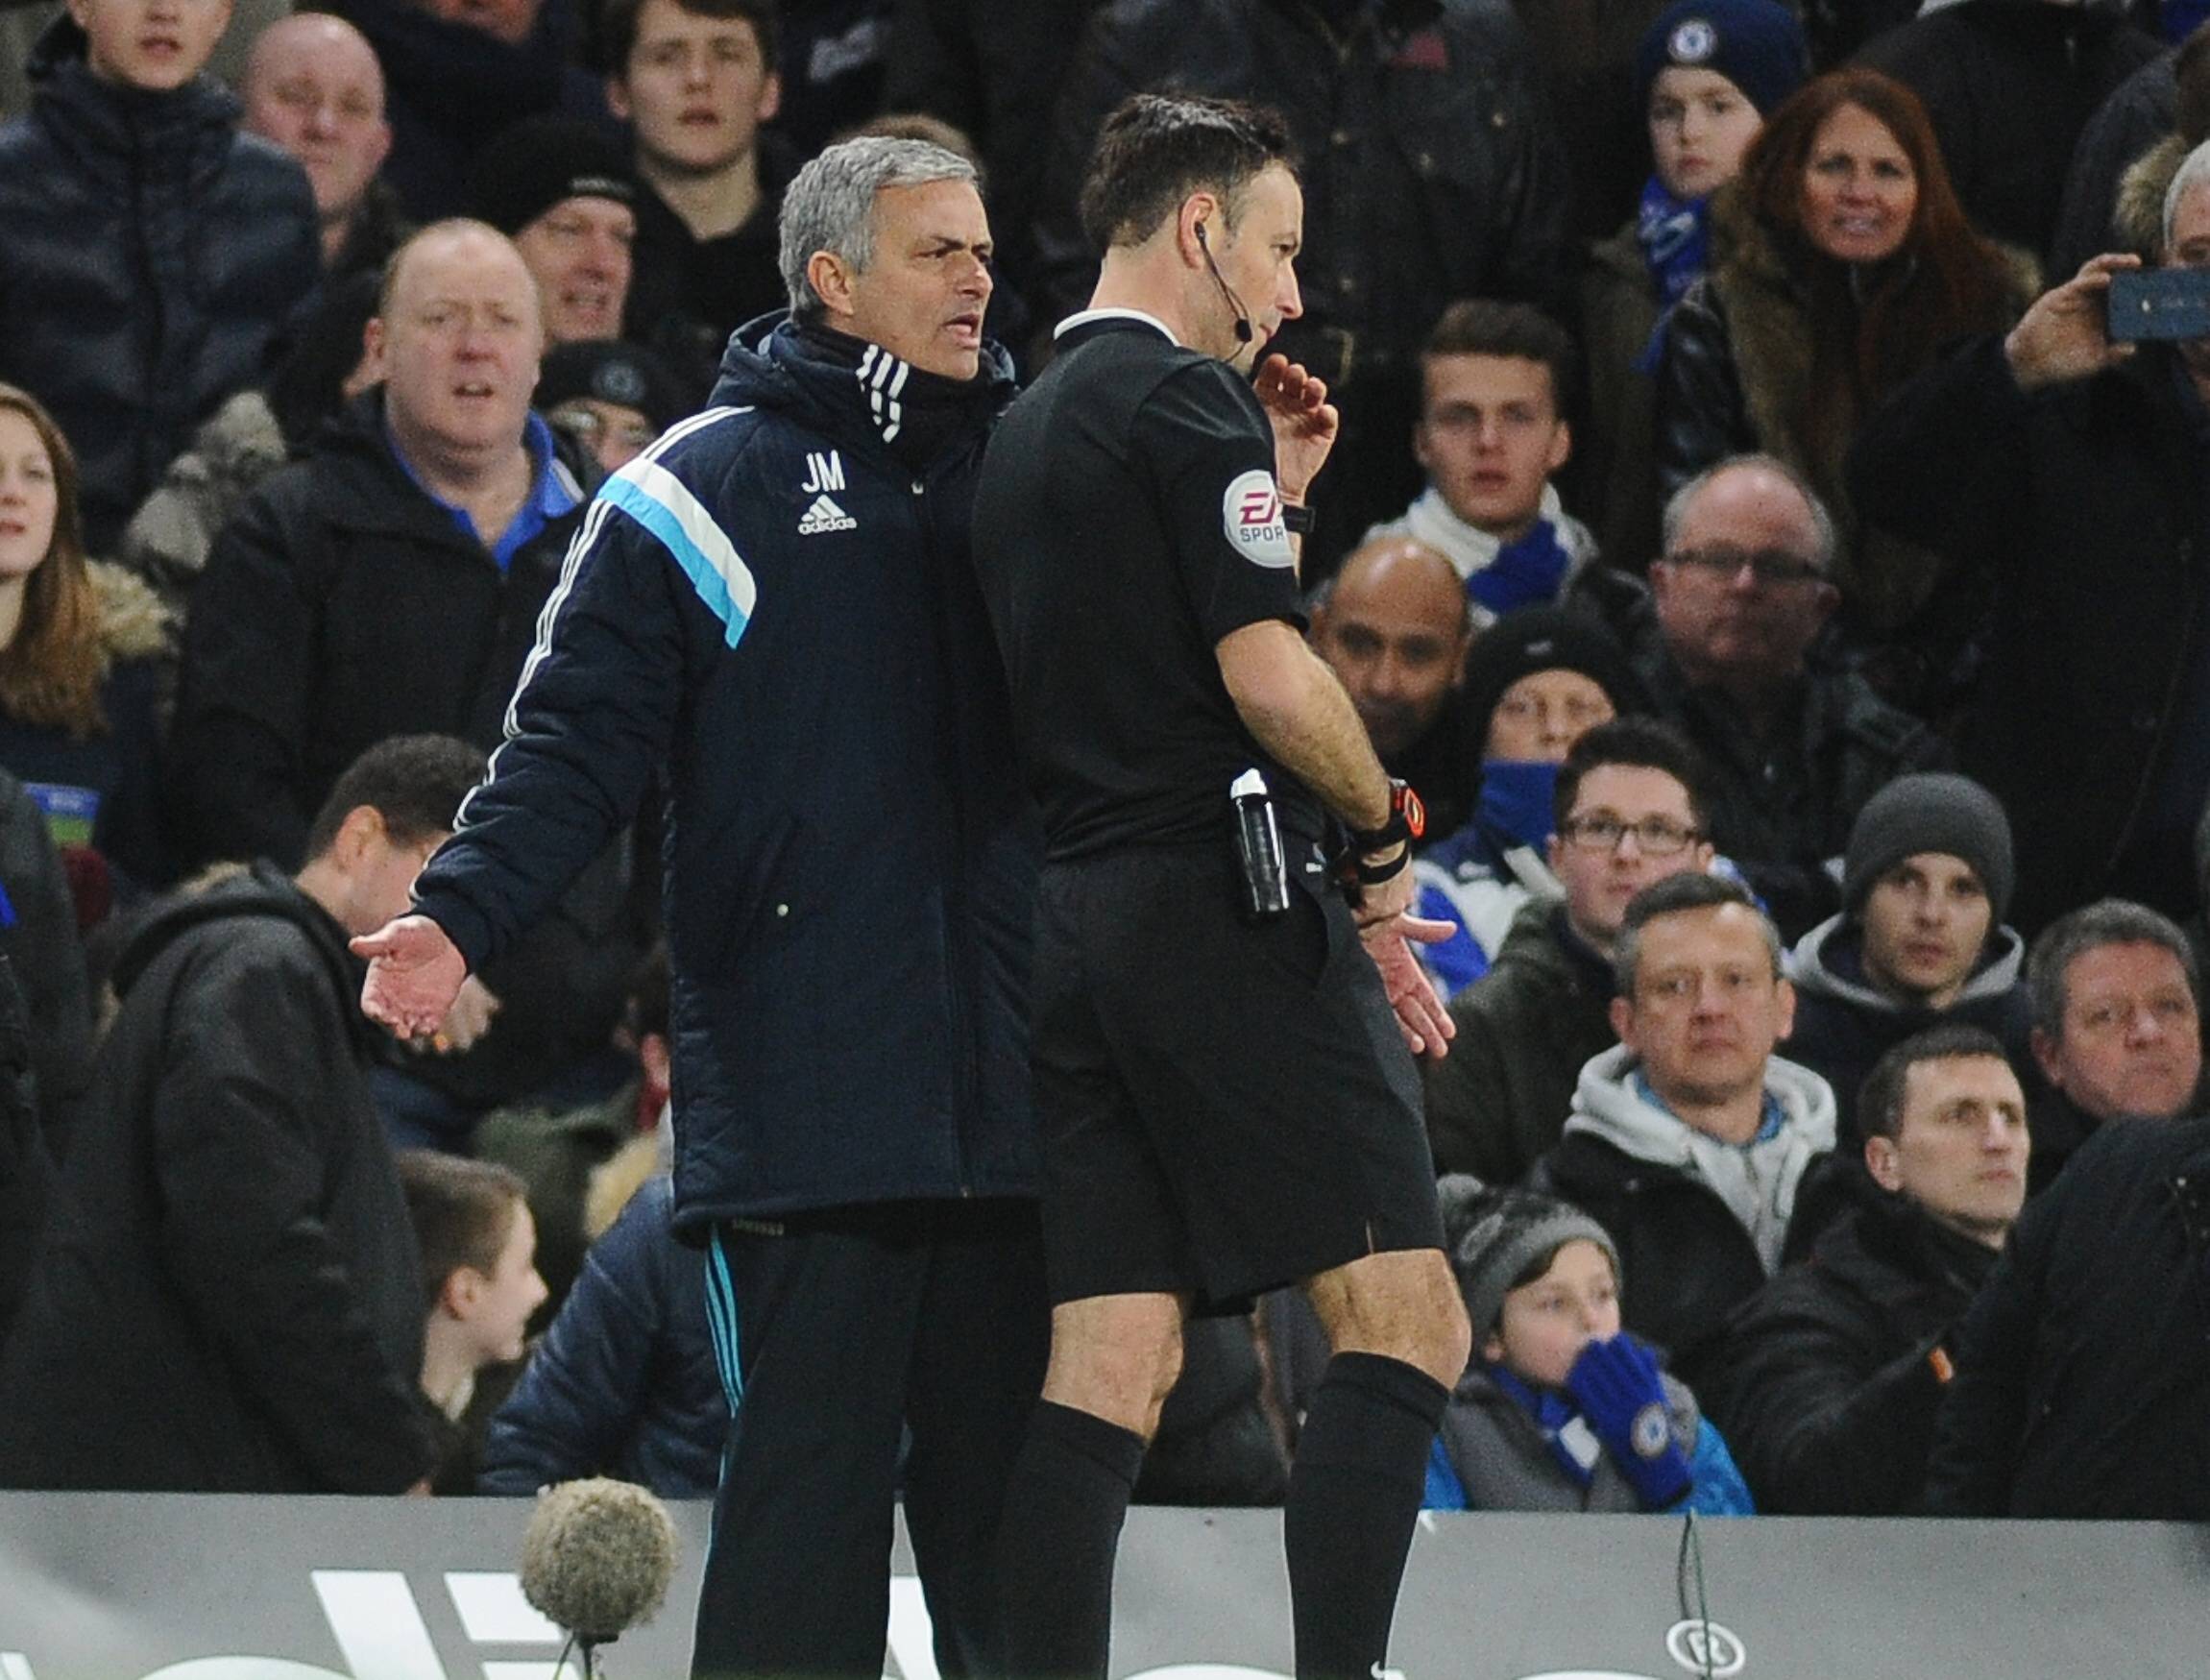 Jose Mourinho argues with Mark Clattenburg during a Premier League game.